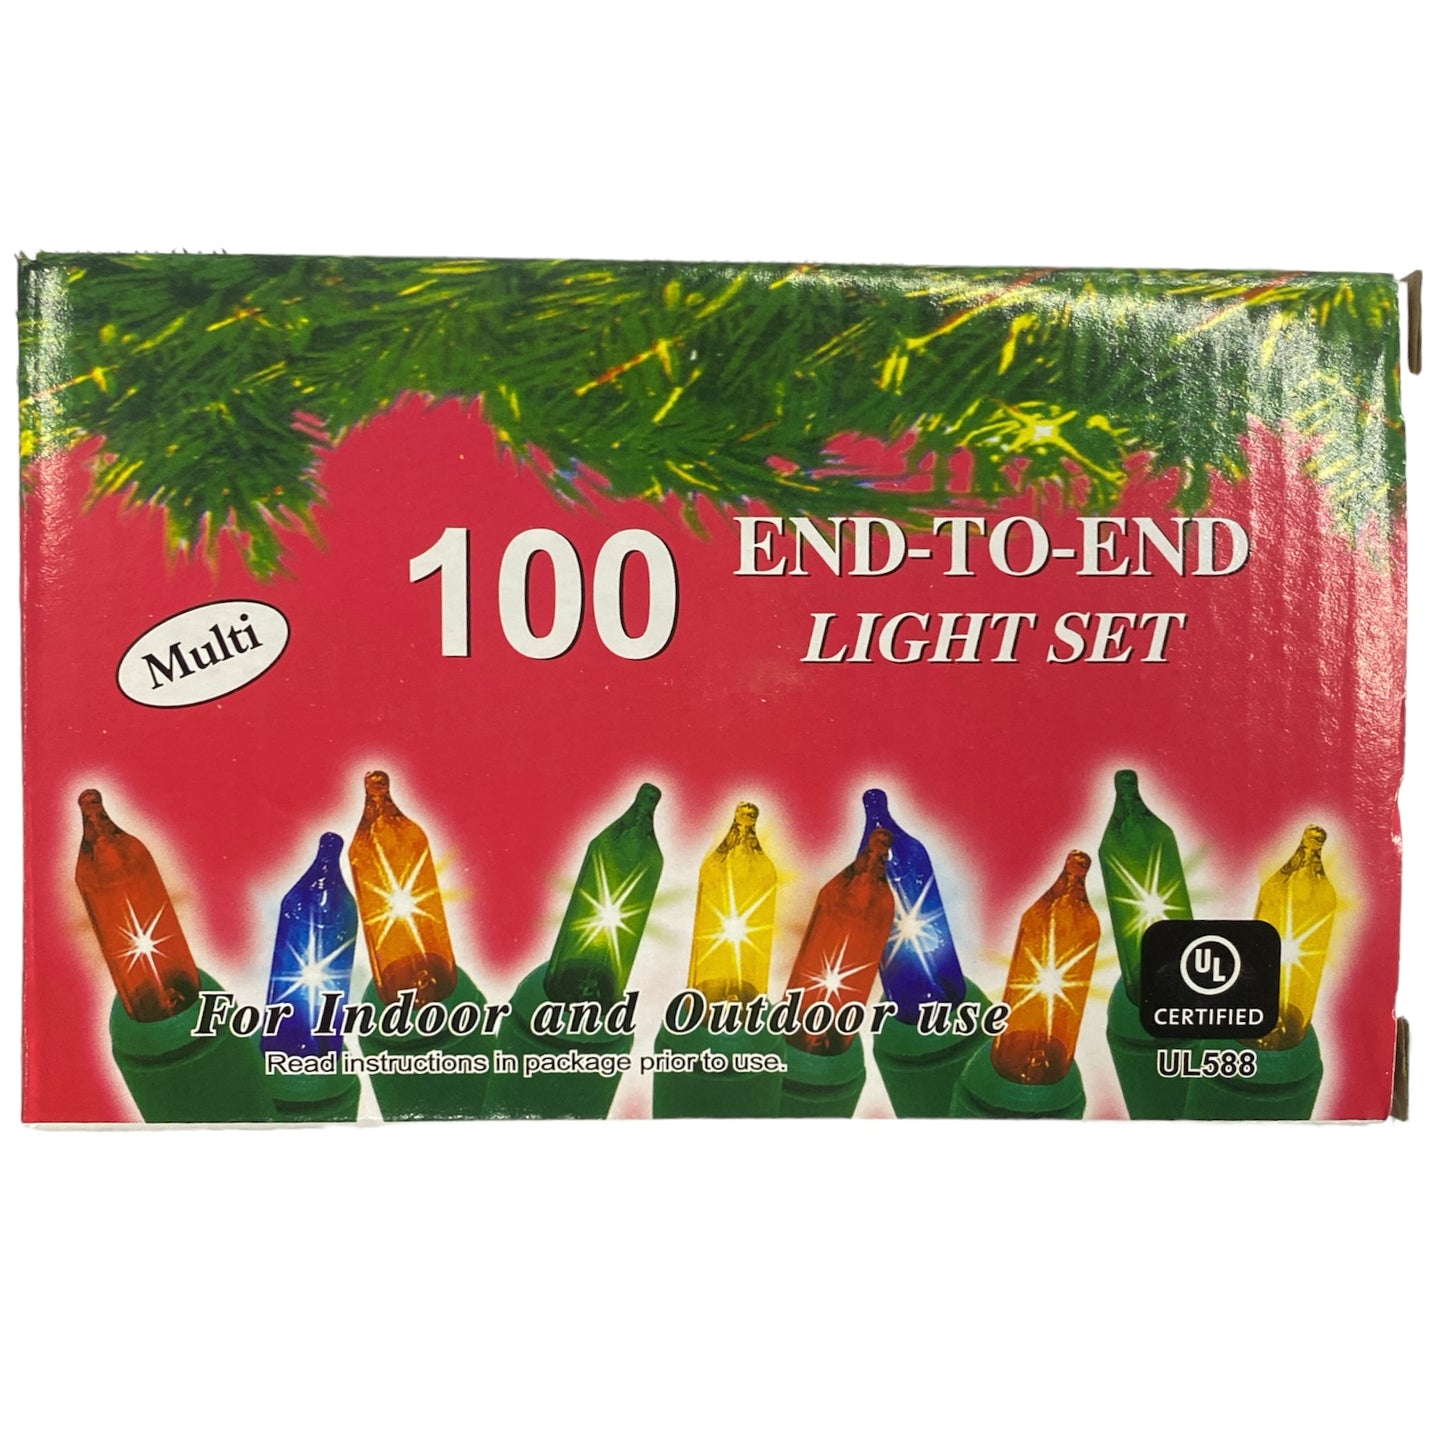 MULTI 100 End to End Light Set